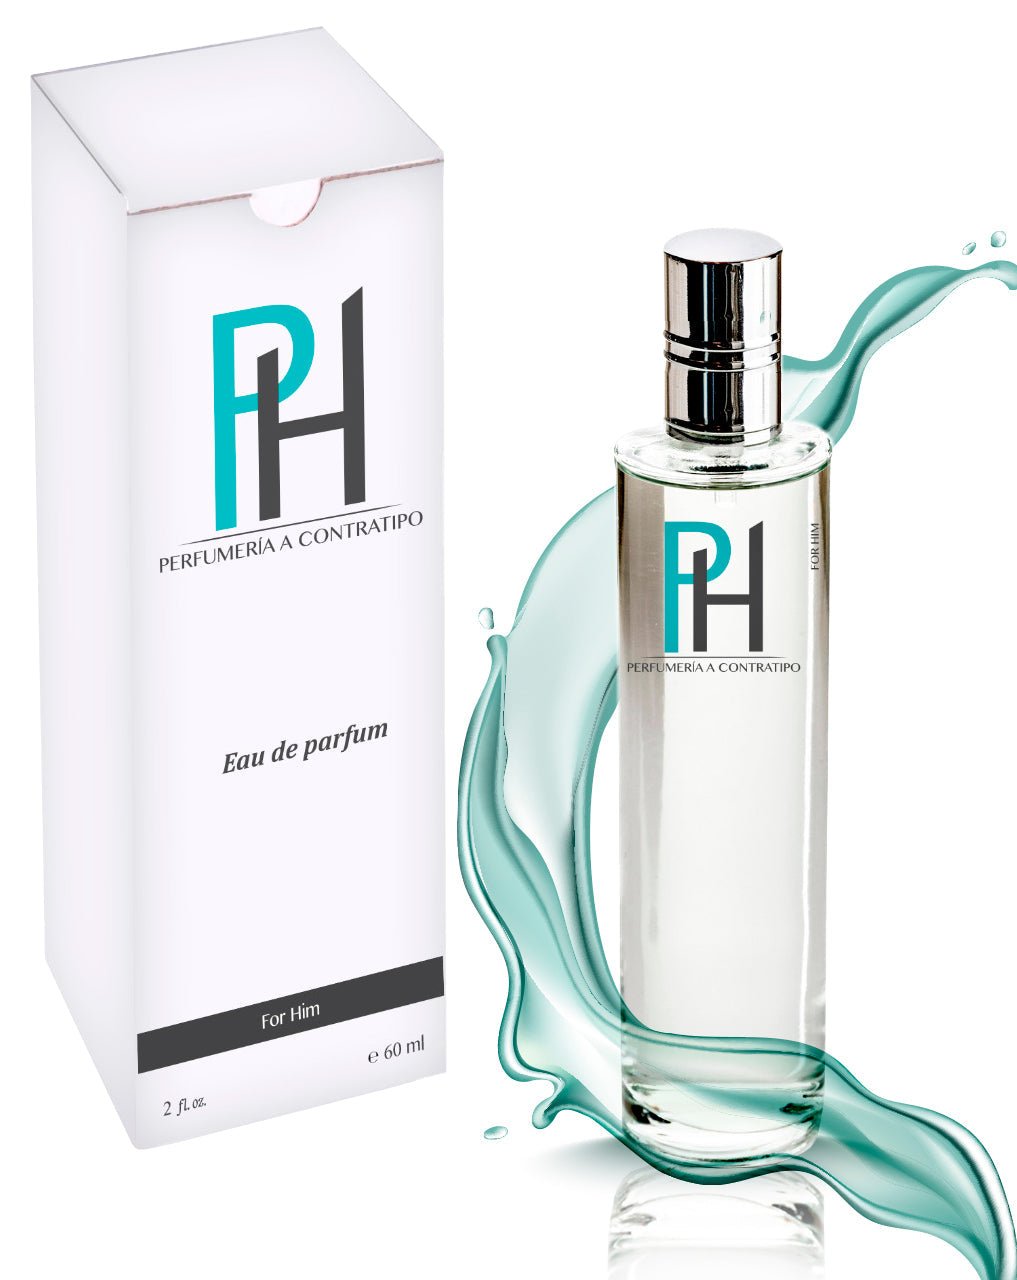 Perfume Allure Sport Extreme De 60 ml - PH Perfumería a Contratipo